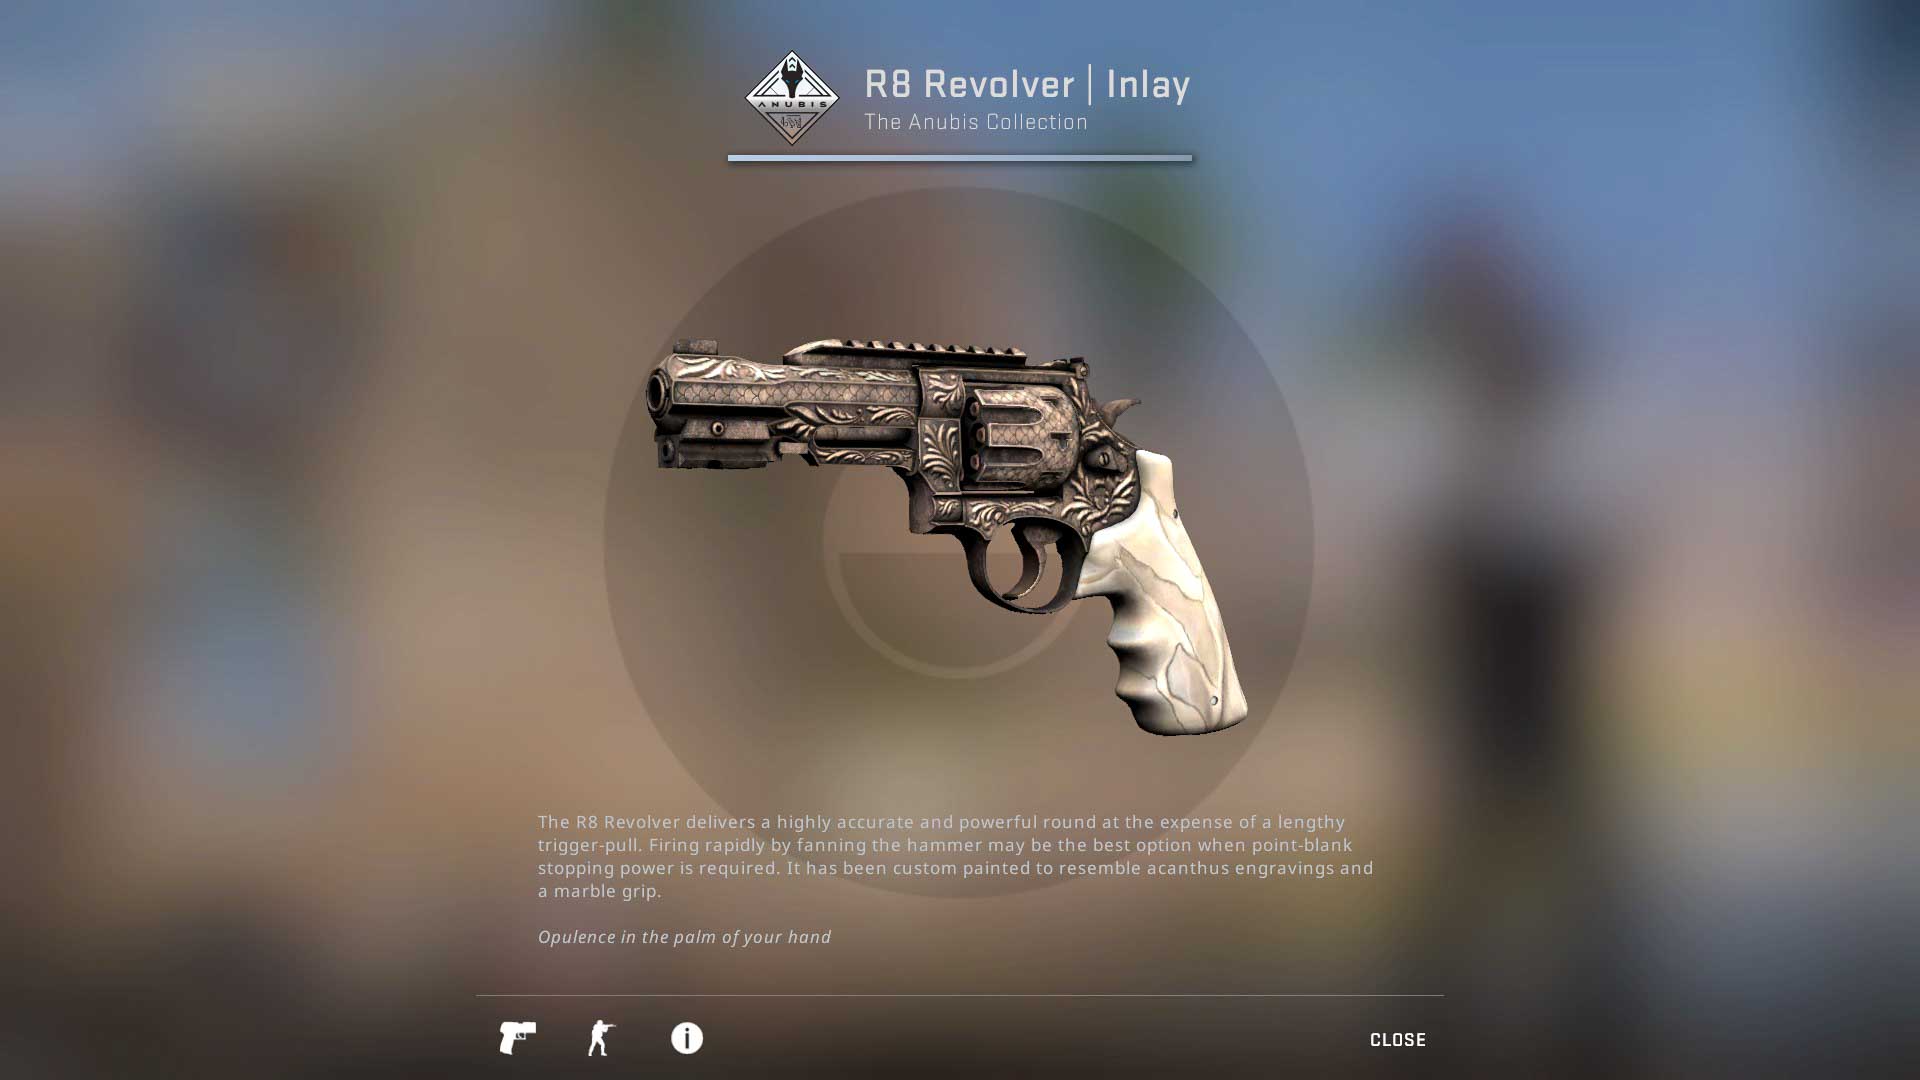 R8 Revolver Inlay csgo skin